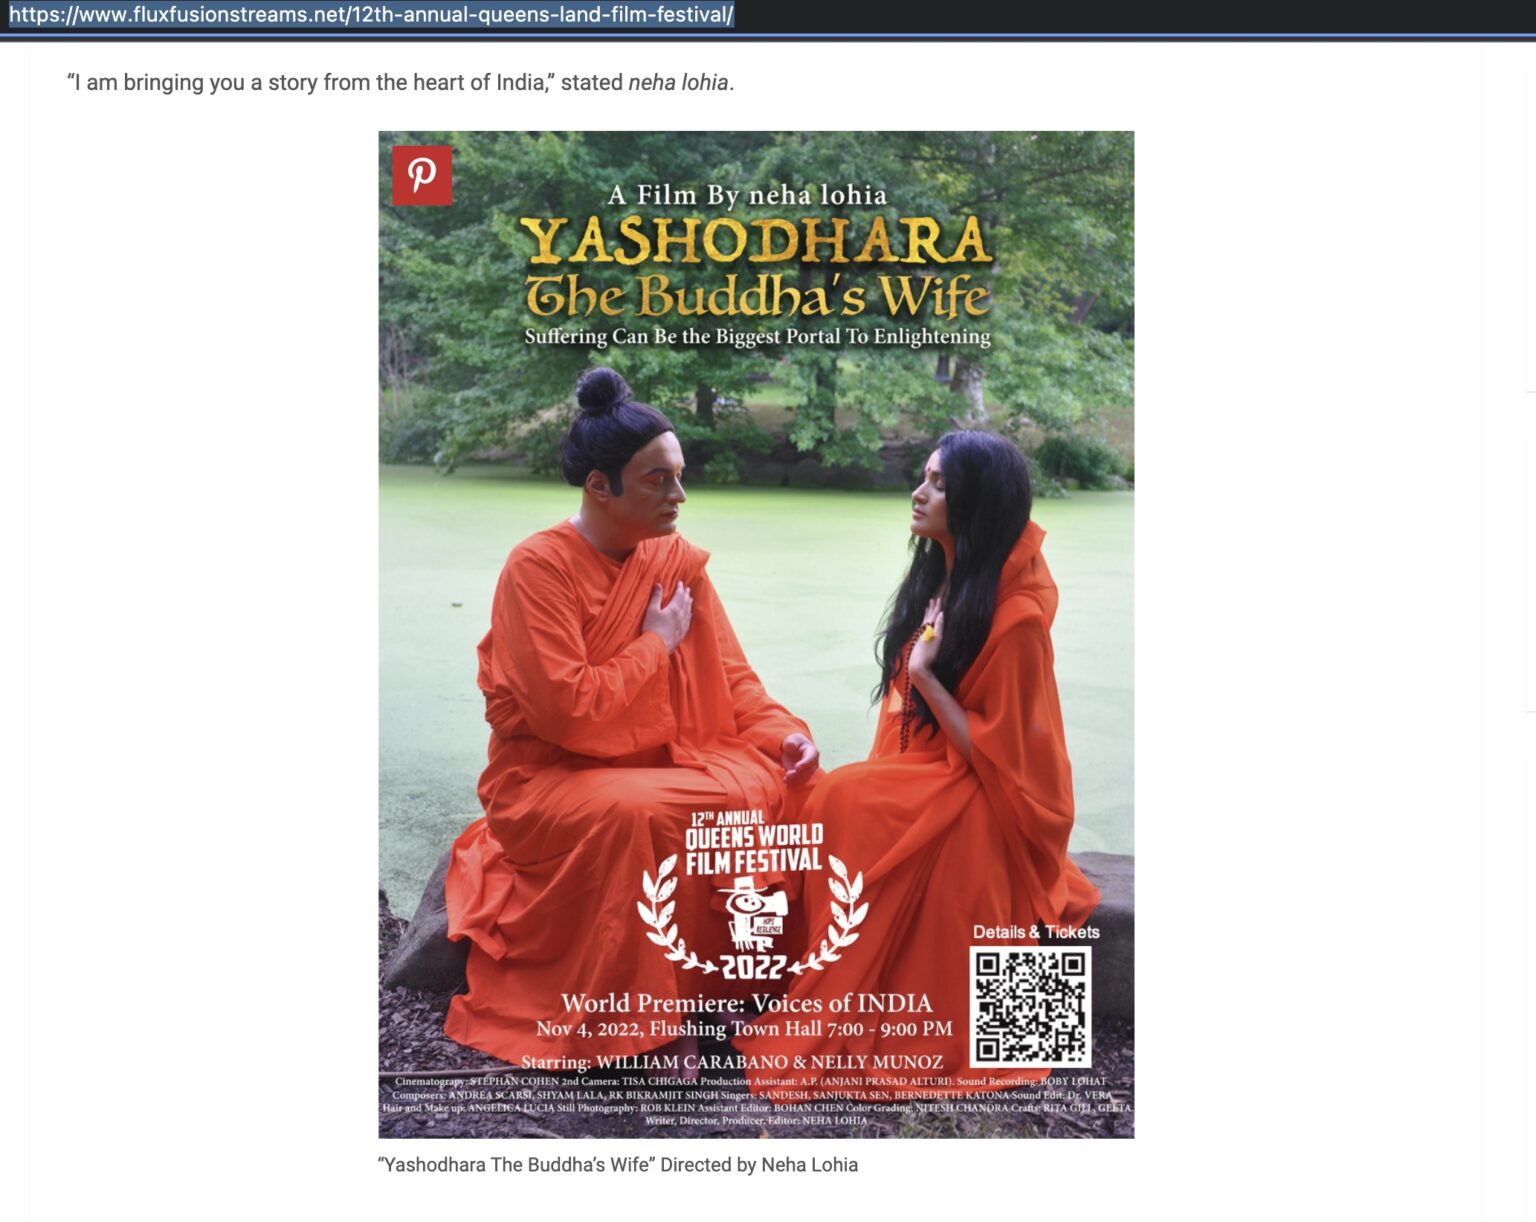 Neha Lohia's film Yashodhara The Buddha's Wife at a media interview